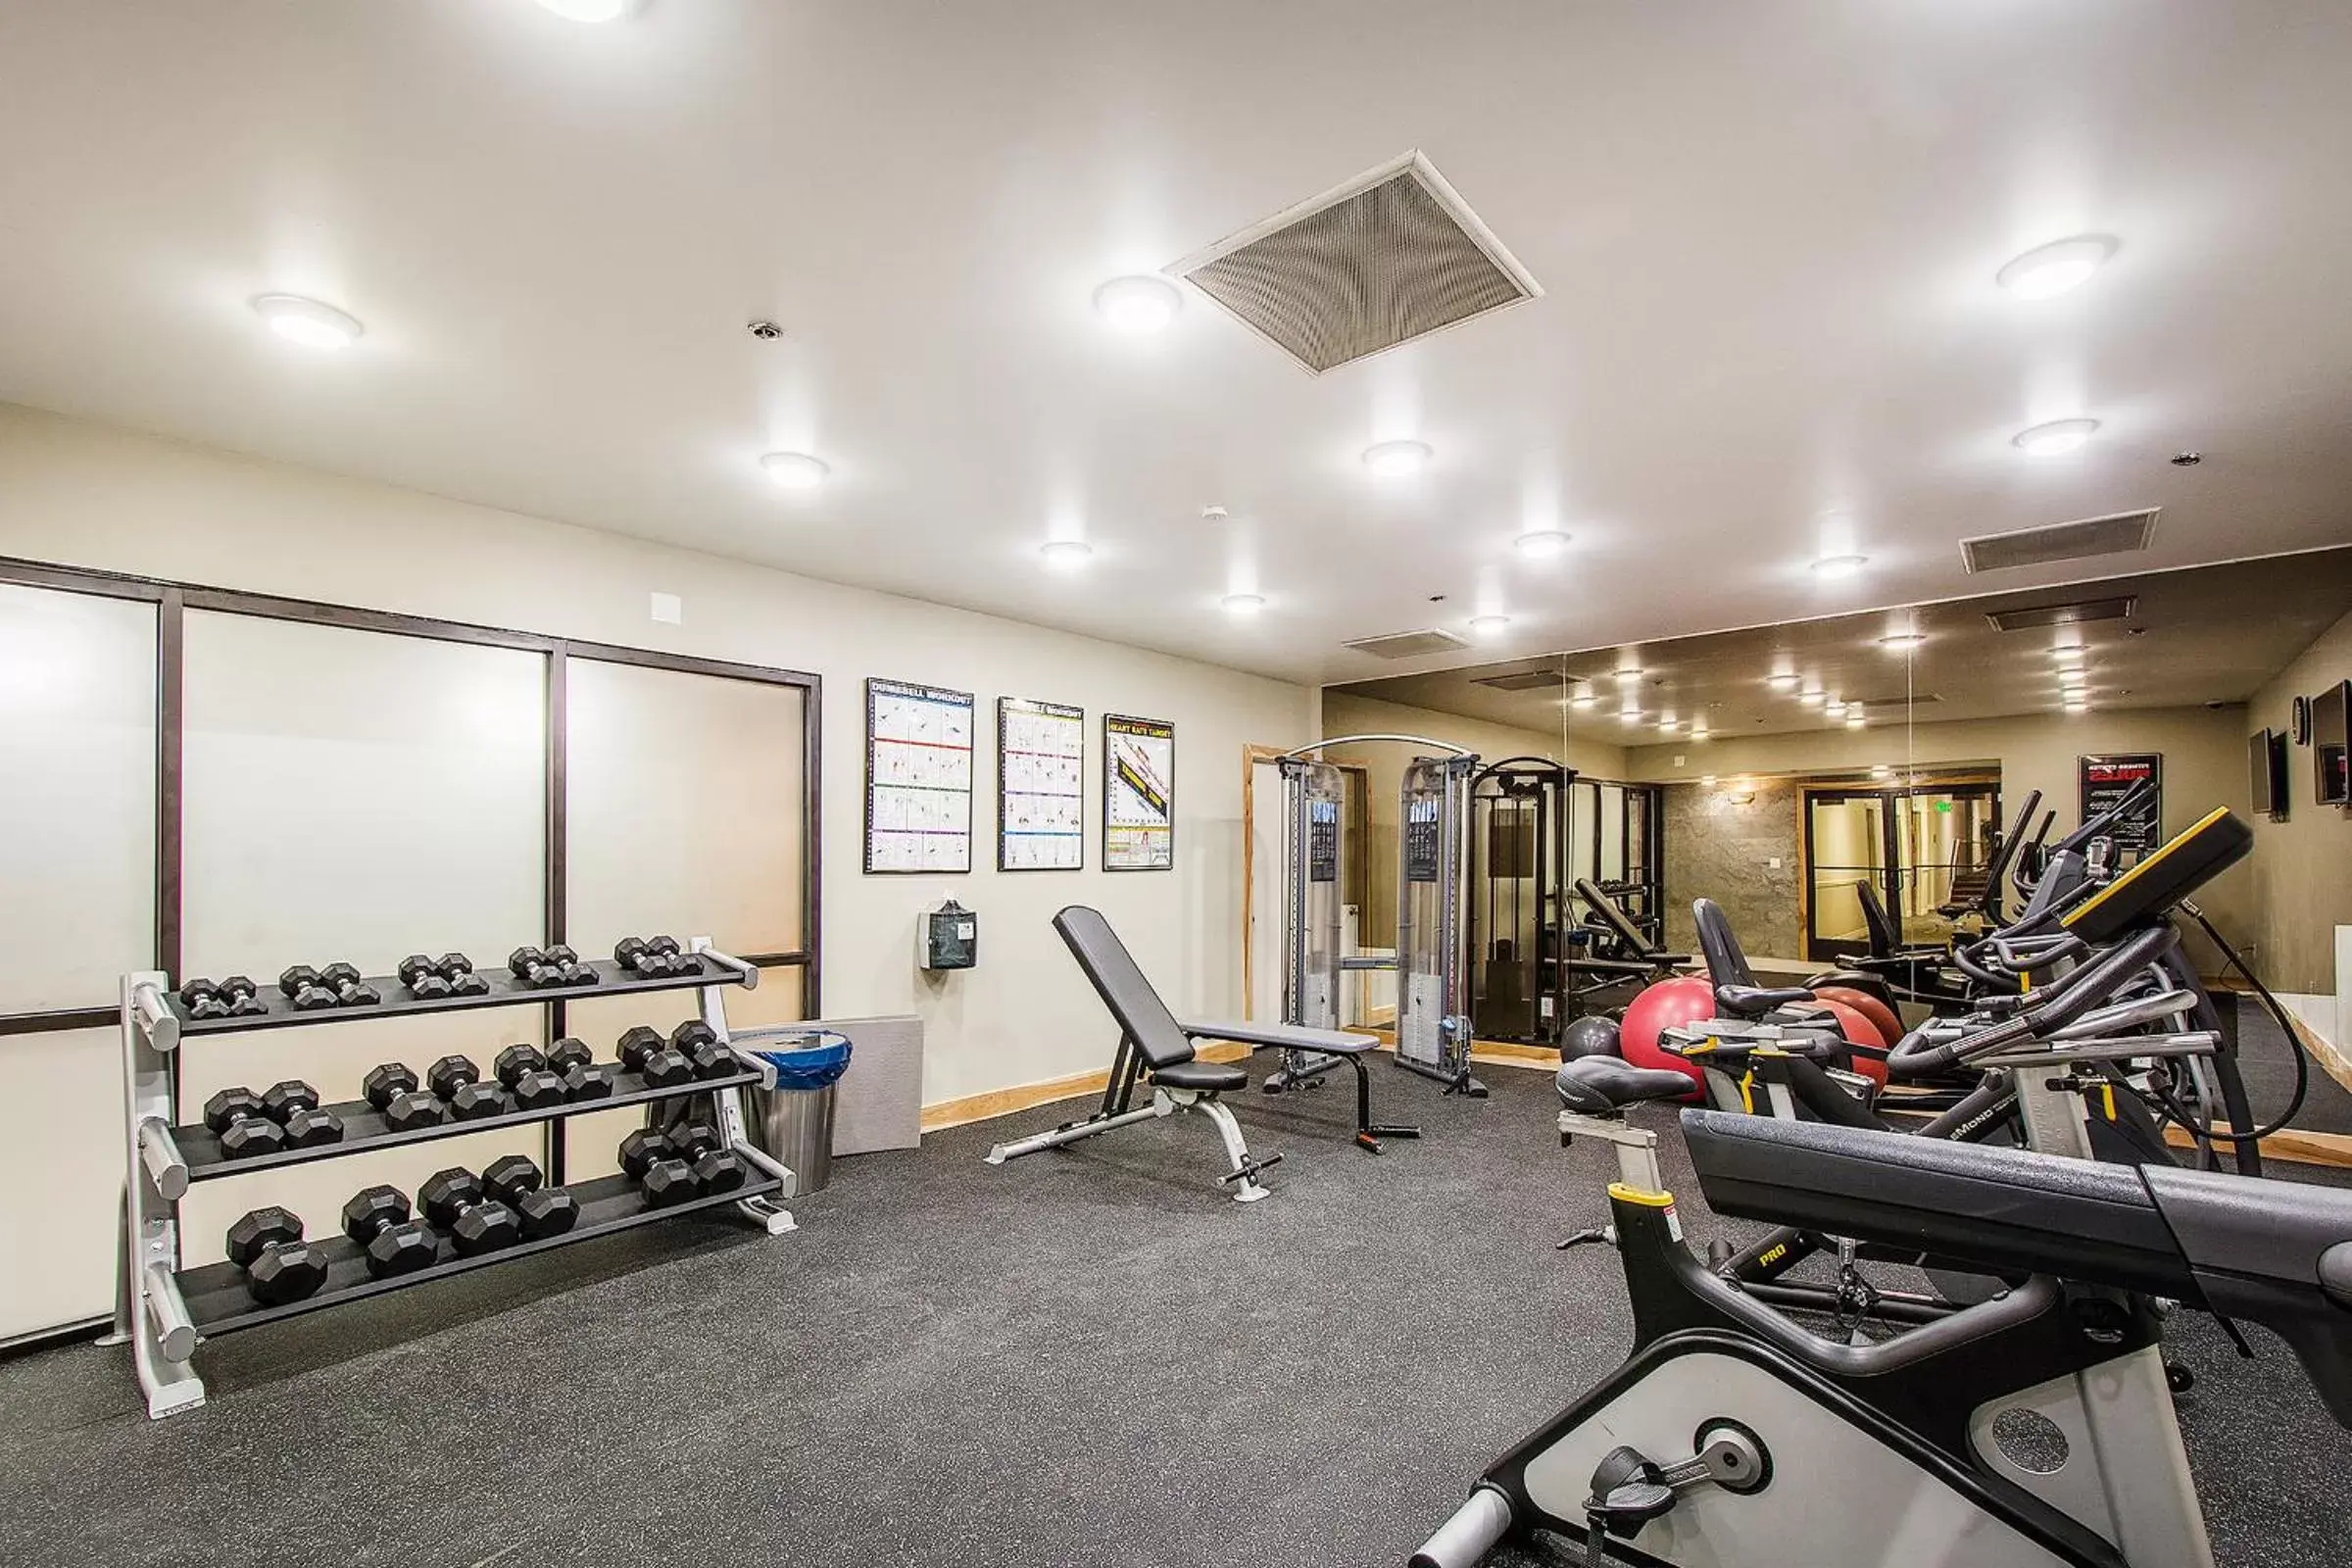 Fitness centre/facilities, Fitness Center/Facilities in Shadow Ridge